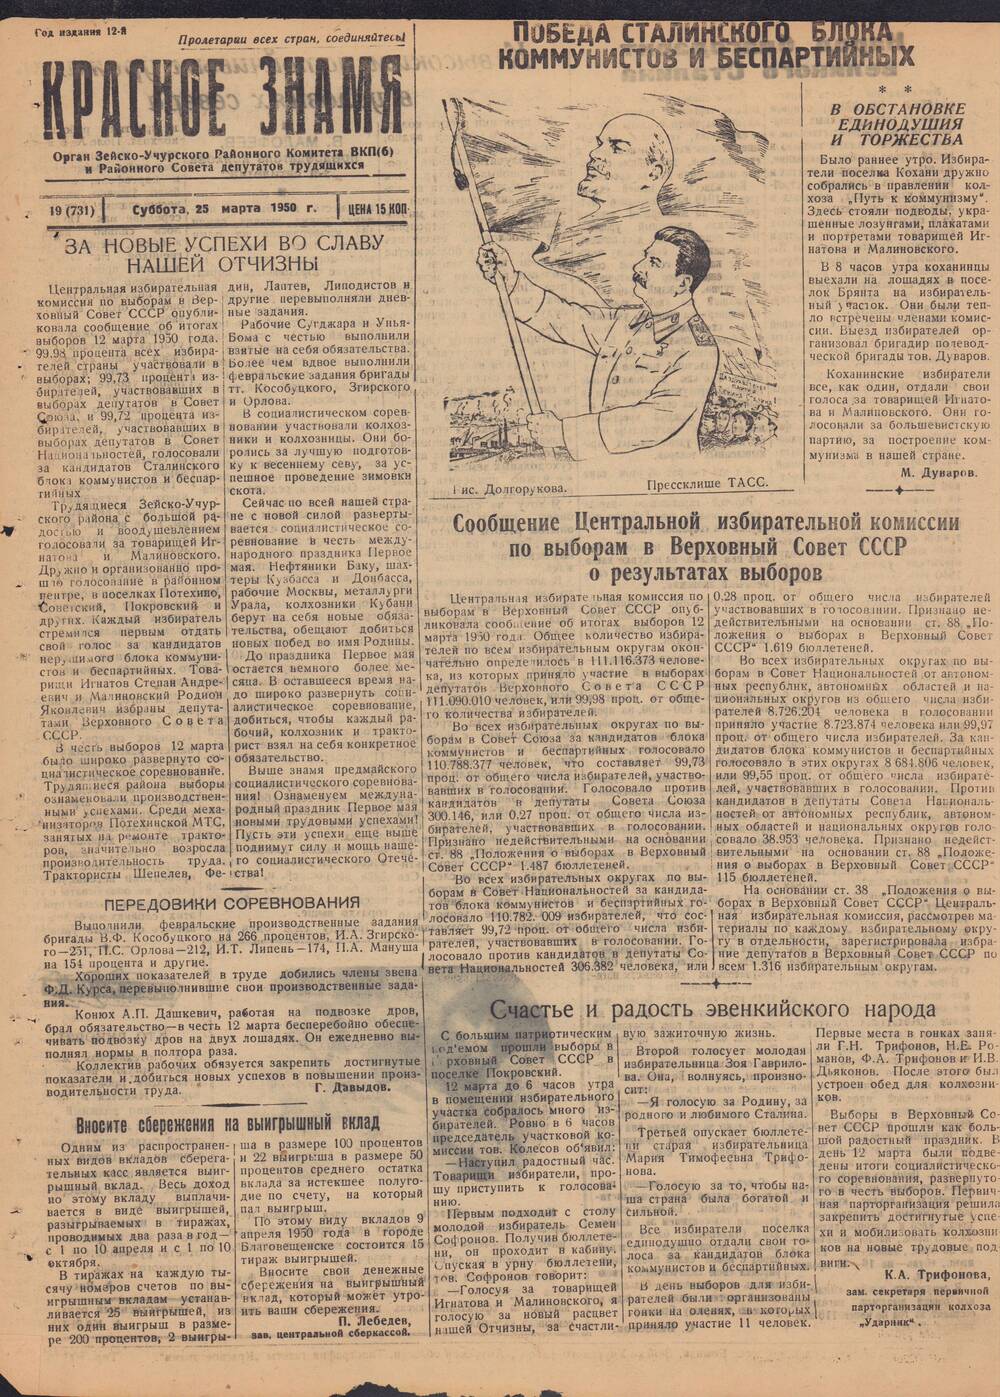 Газета Красное знамя №19 (731) от 25 марта 1950 года.